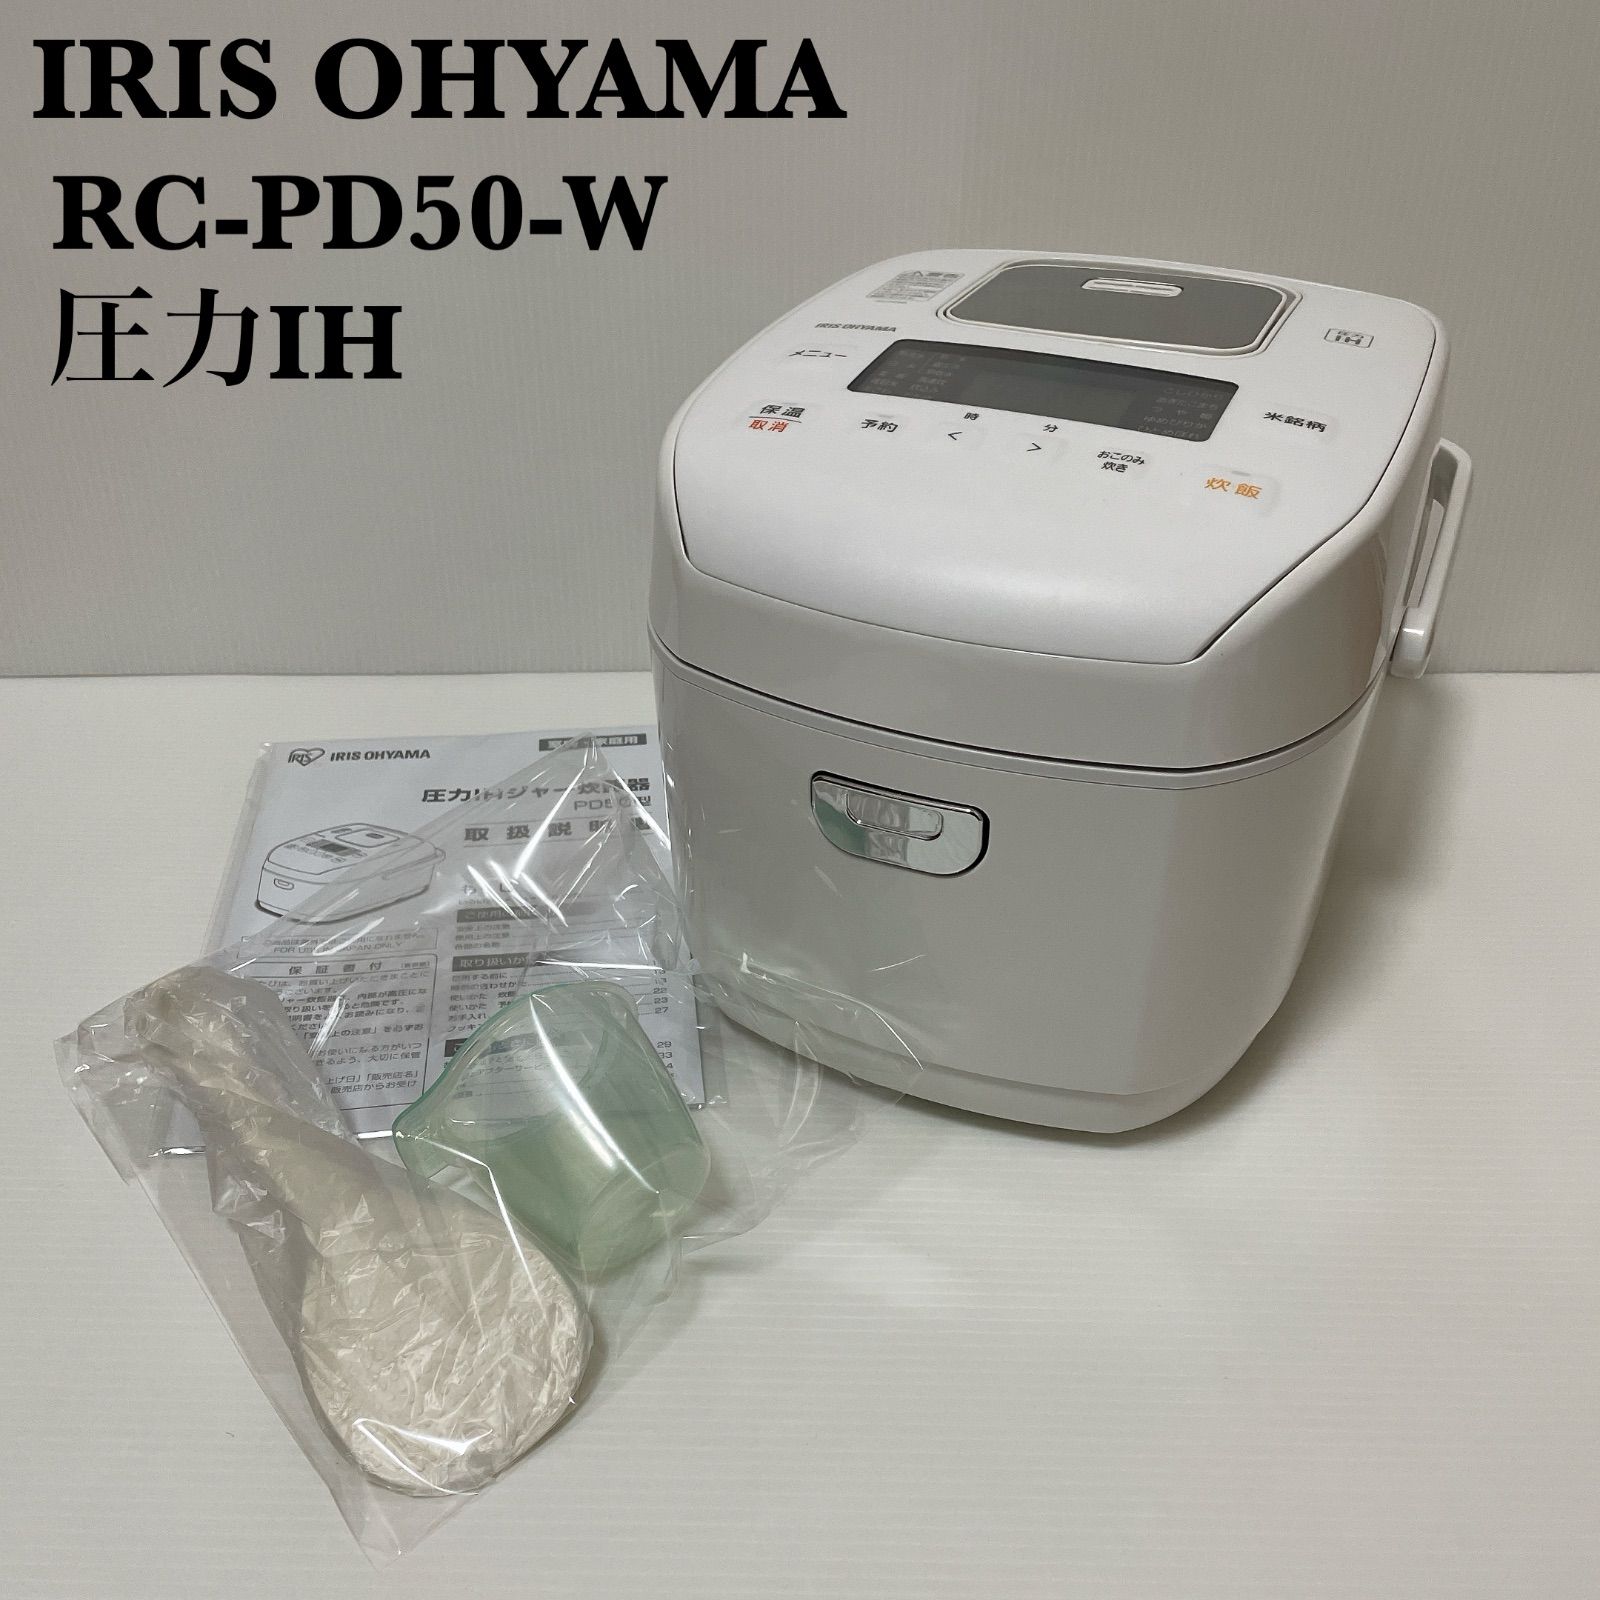 IRIS RC-PD50-W WHITE - 炊飯器・餅つき機